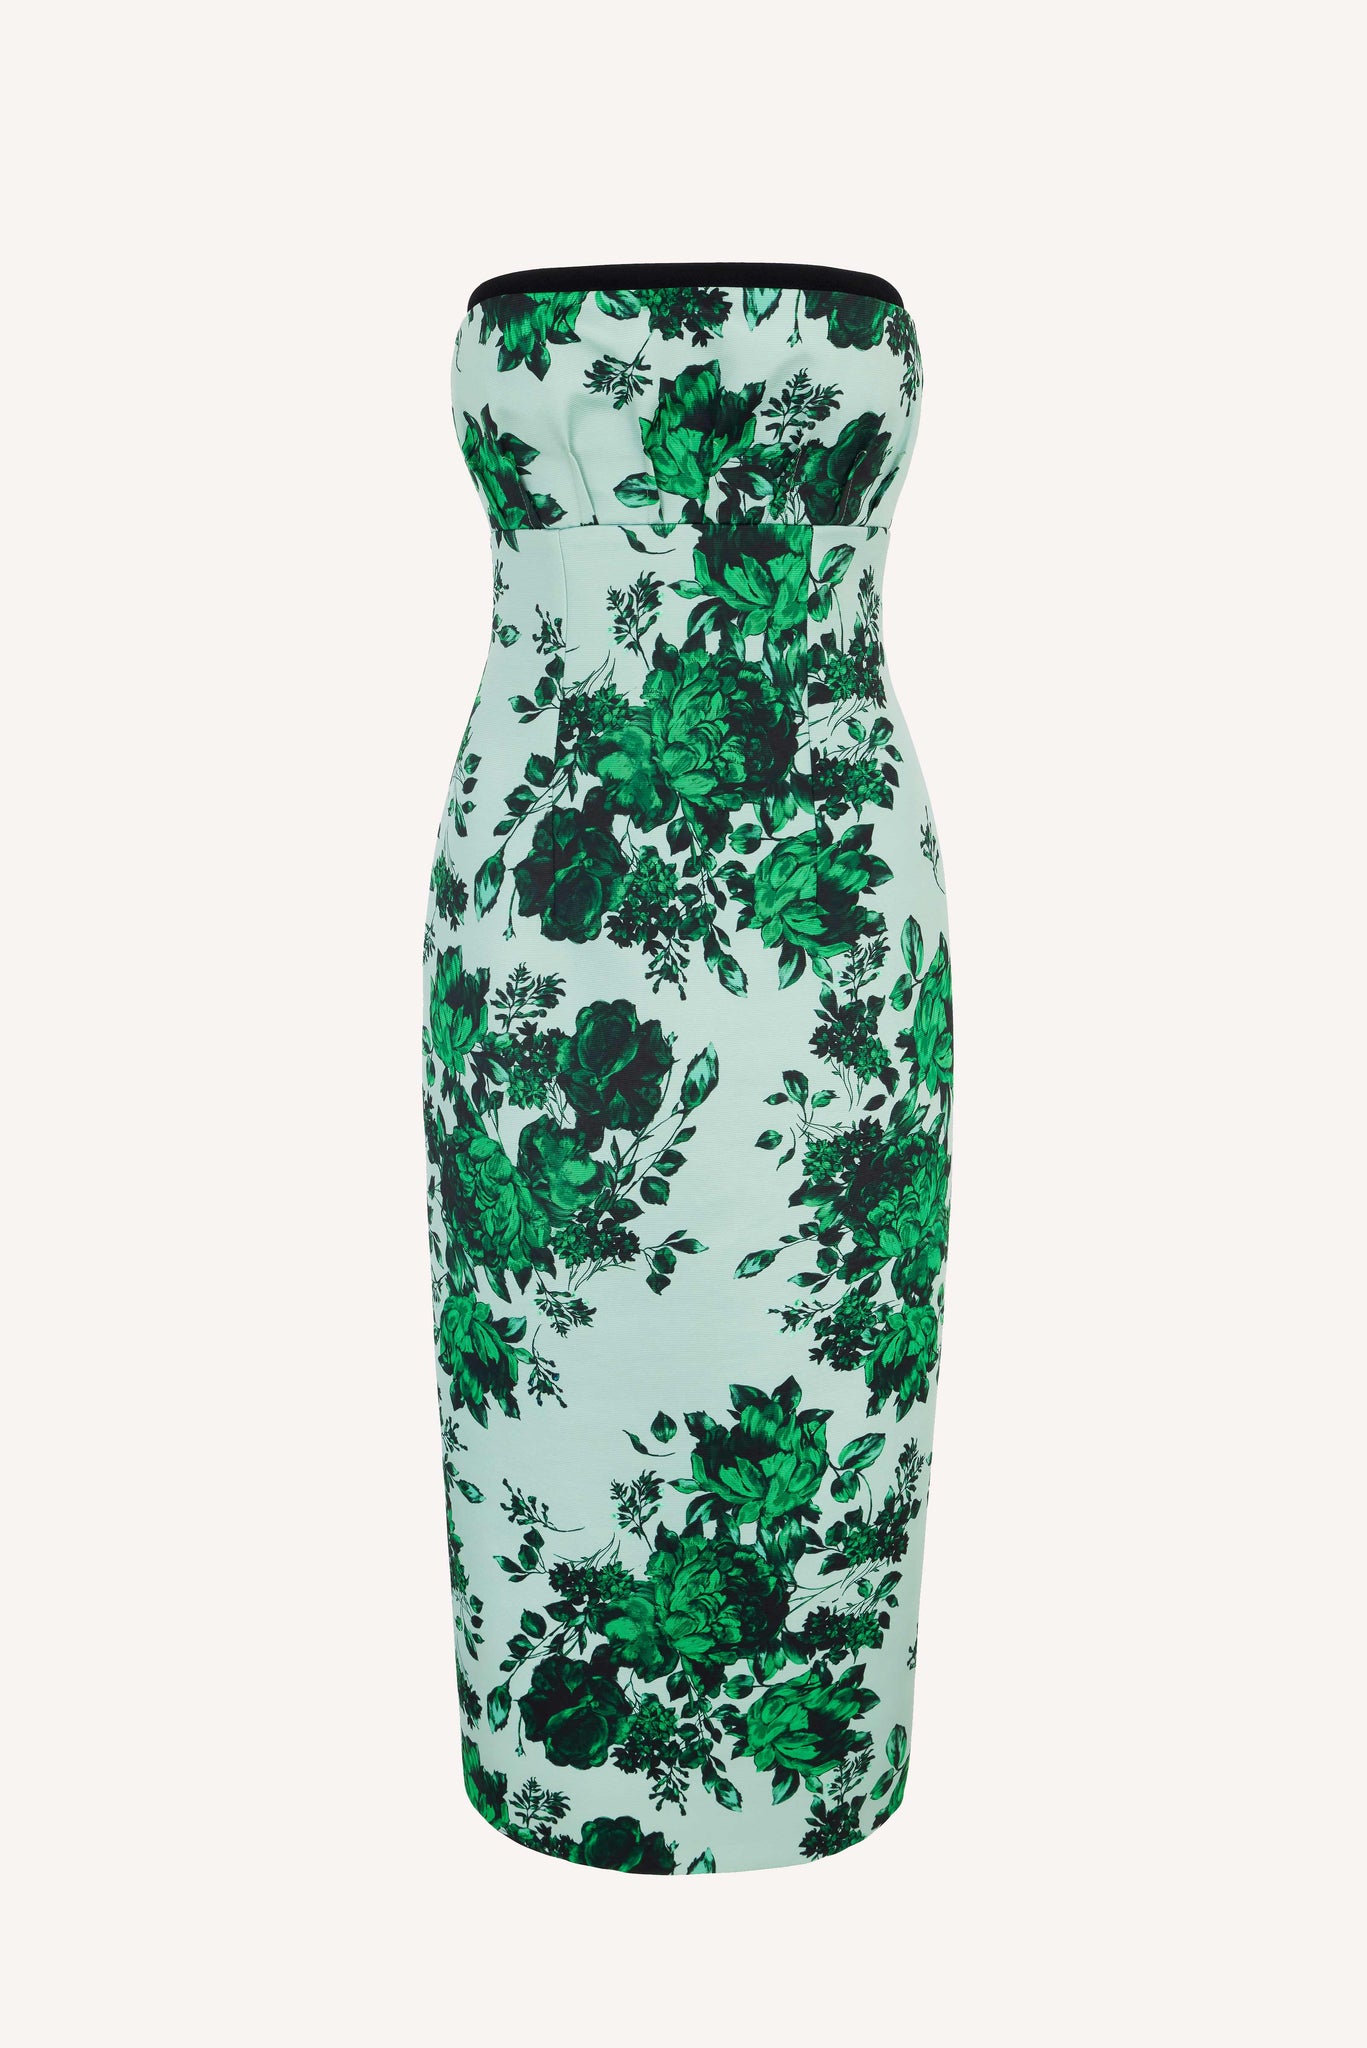 Adalina Strapless Dress in Green Festive Bouquet Printed Taffeta Faille | Emilia Wickstead